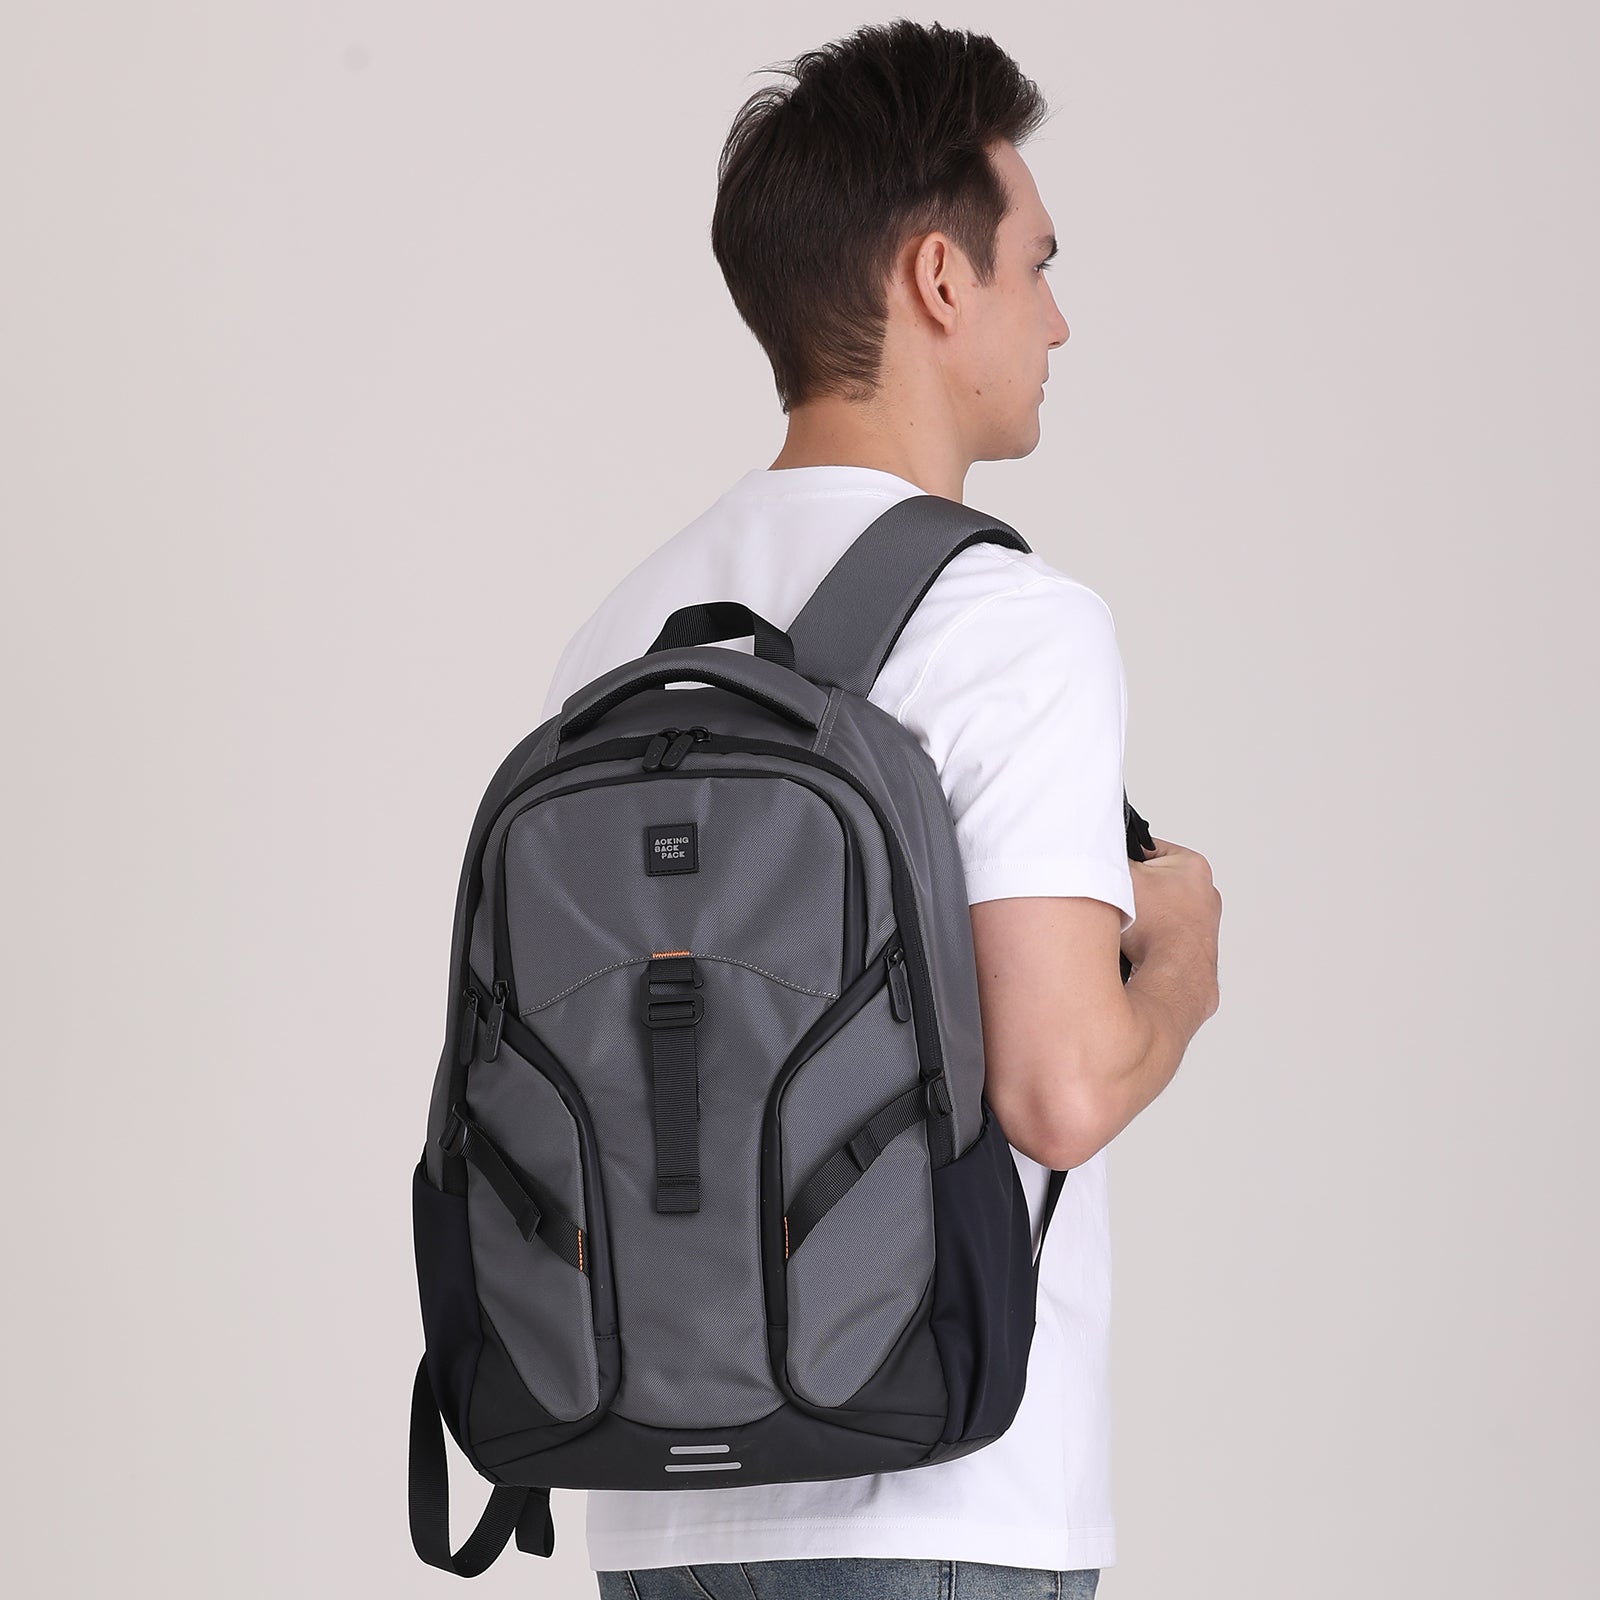 Aoking Travel Backpack XN2686 Grey